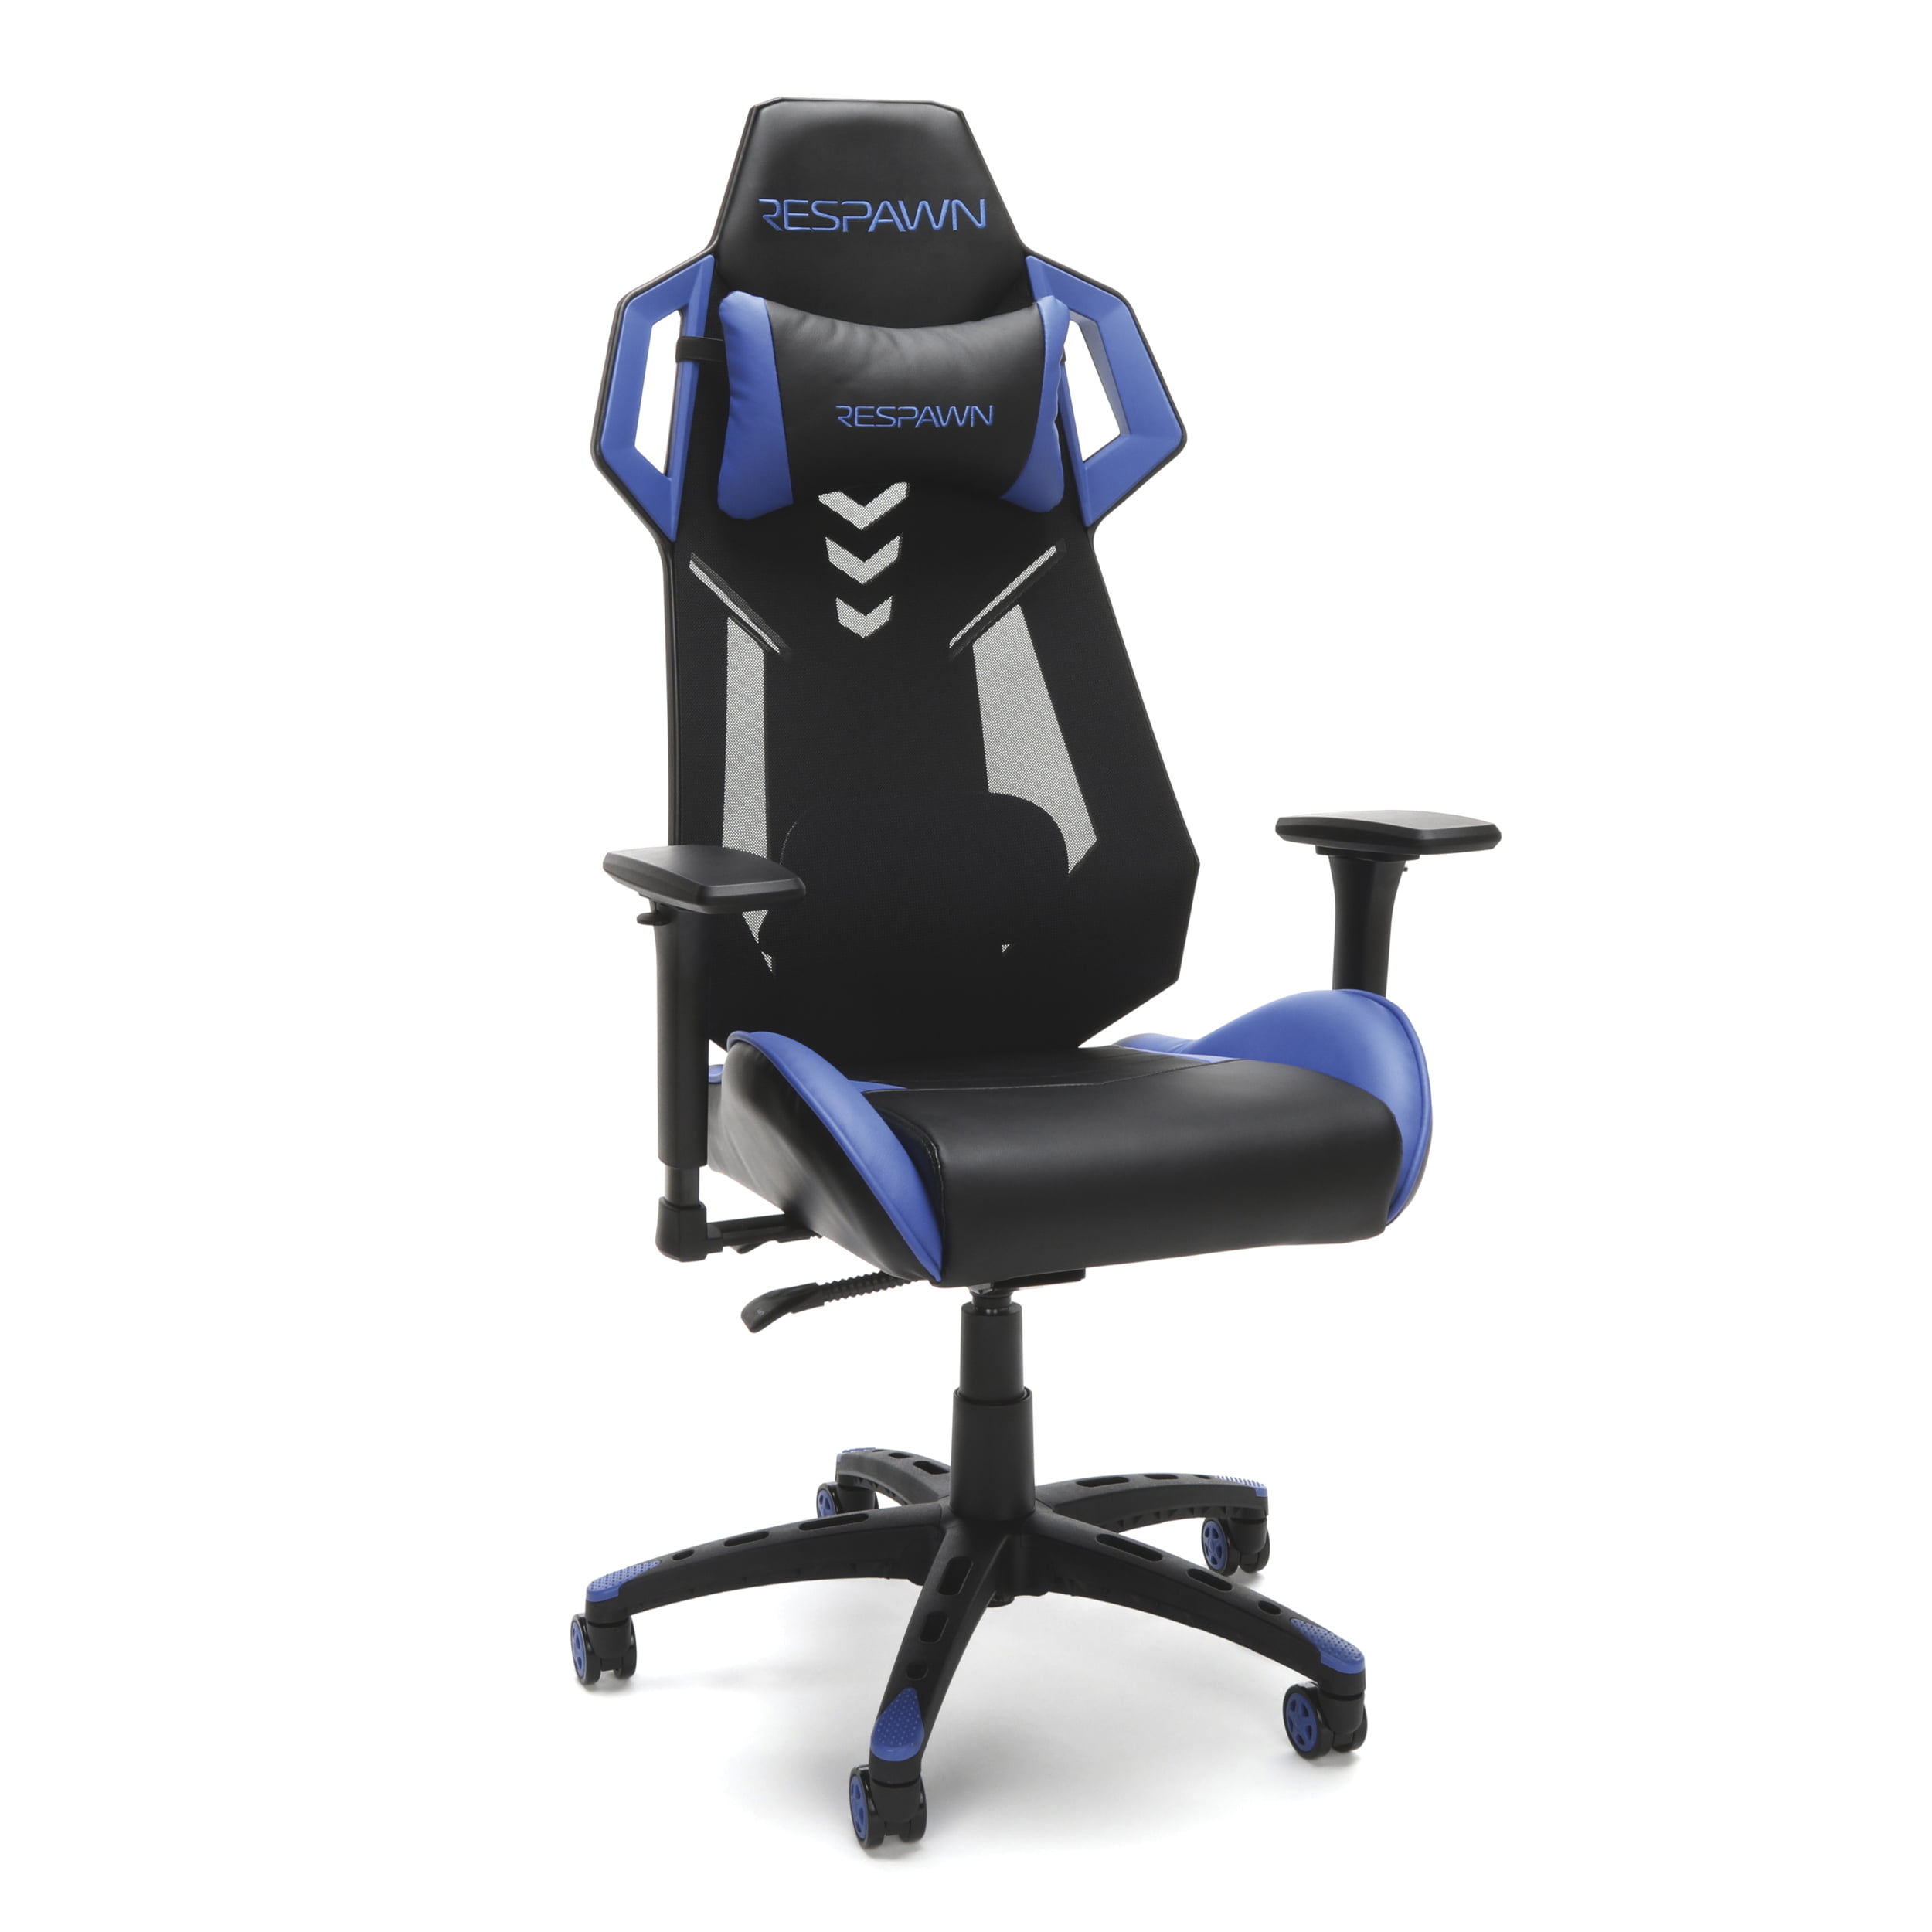 RESPAWN200 Racing Style Gaming Chair Ergonomic